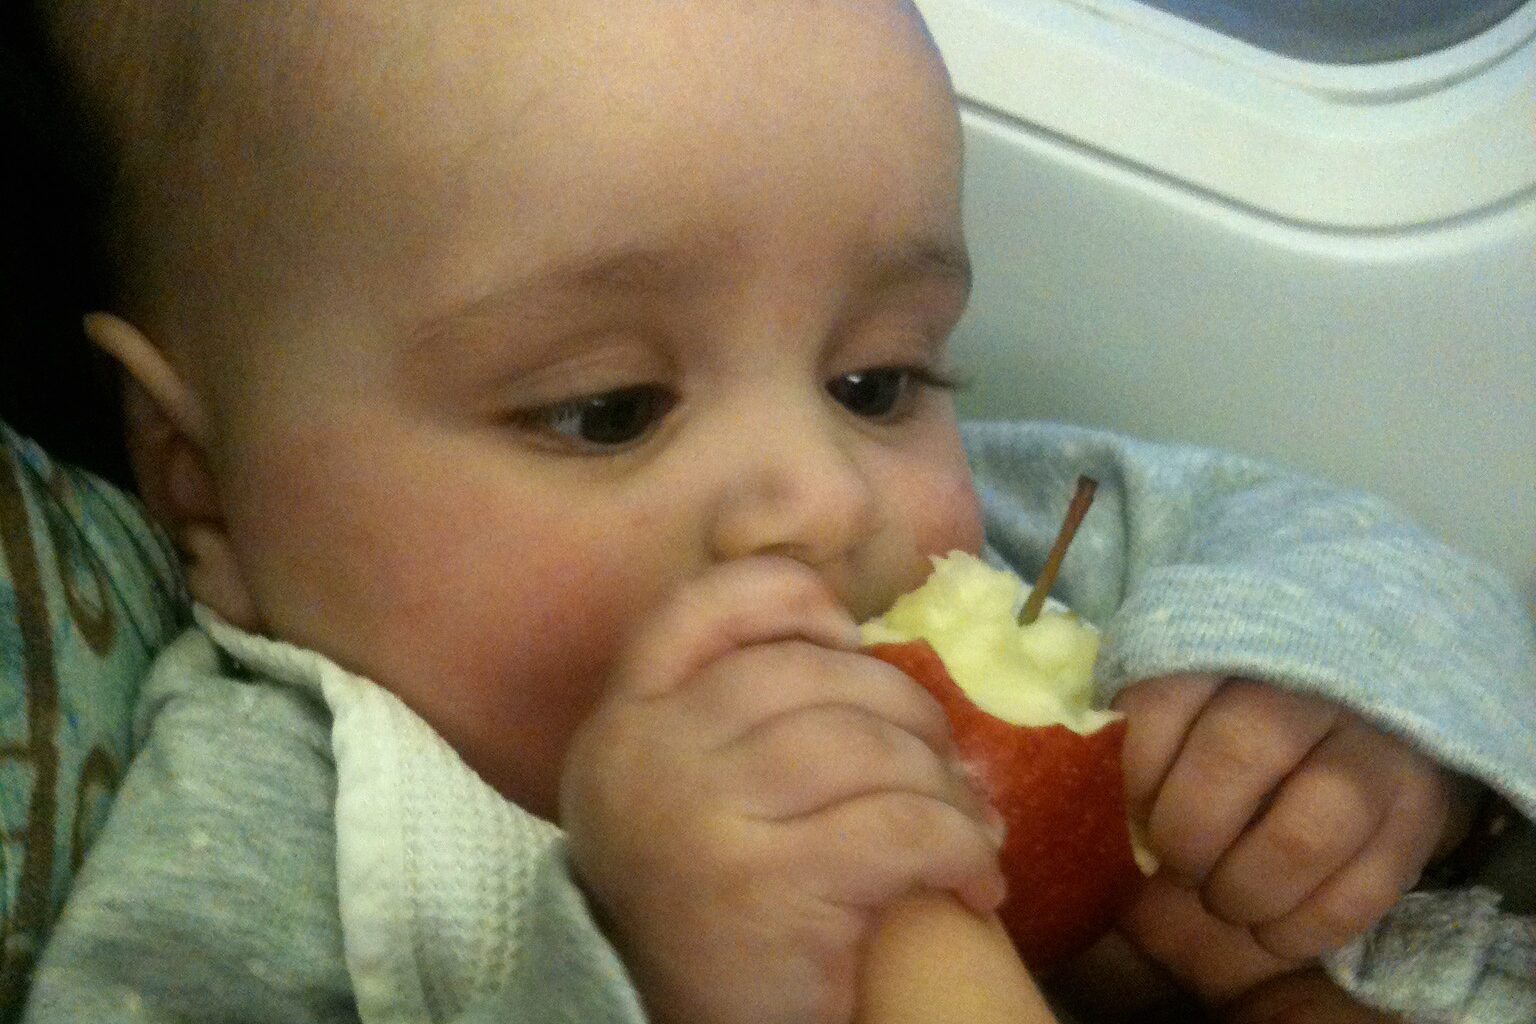 Bambina di 5 mesi succhia una mela